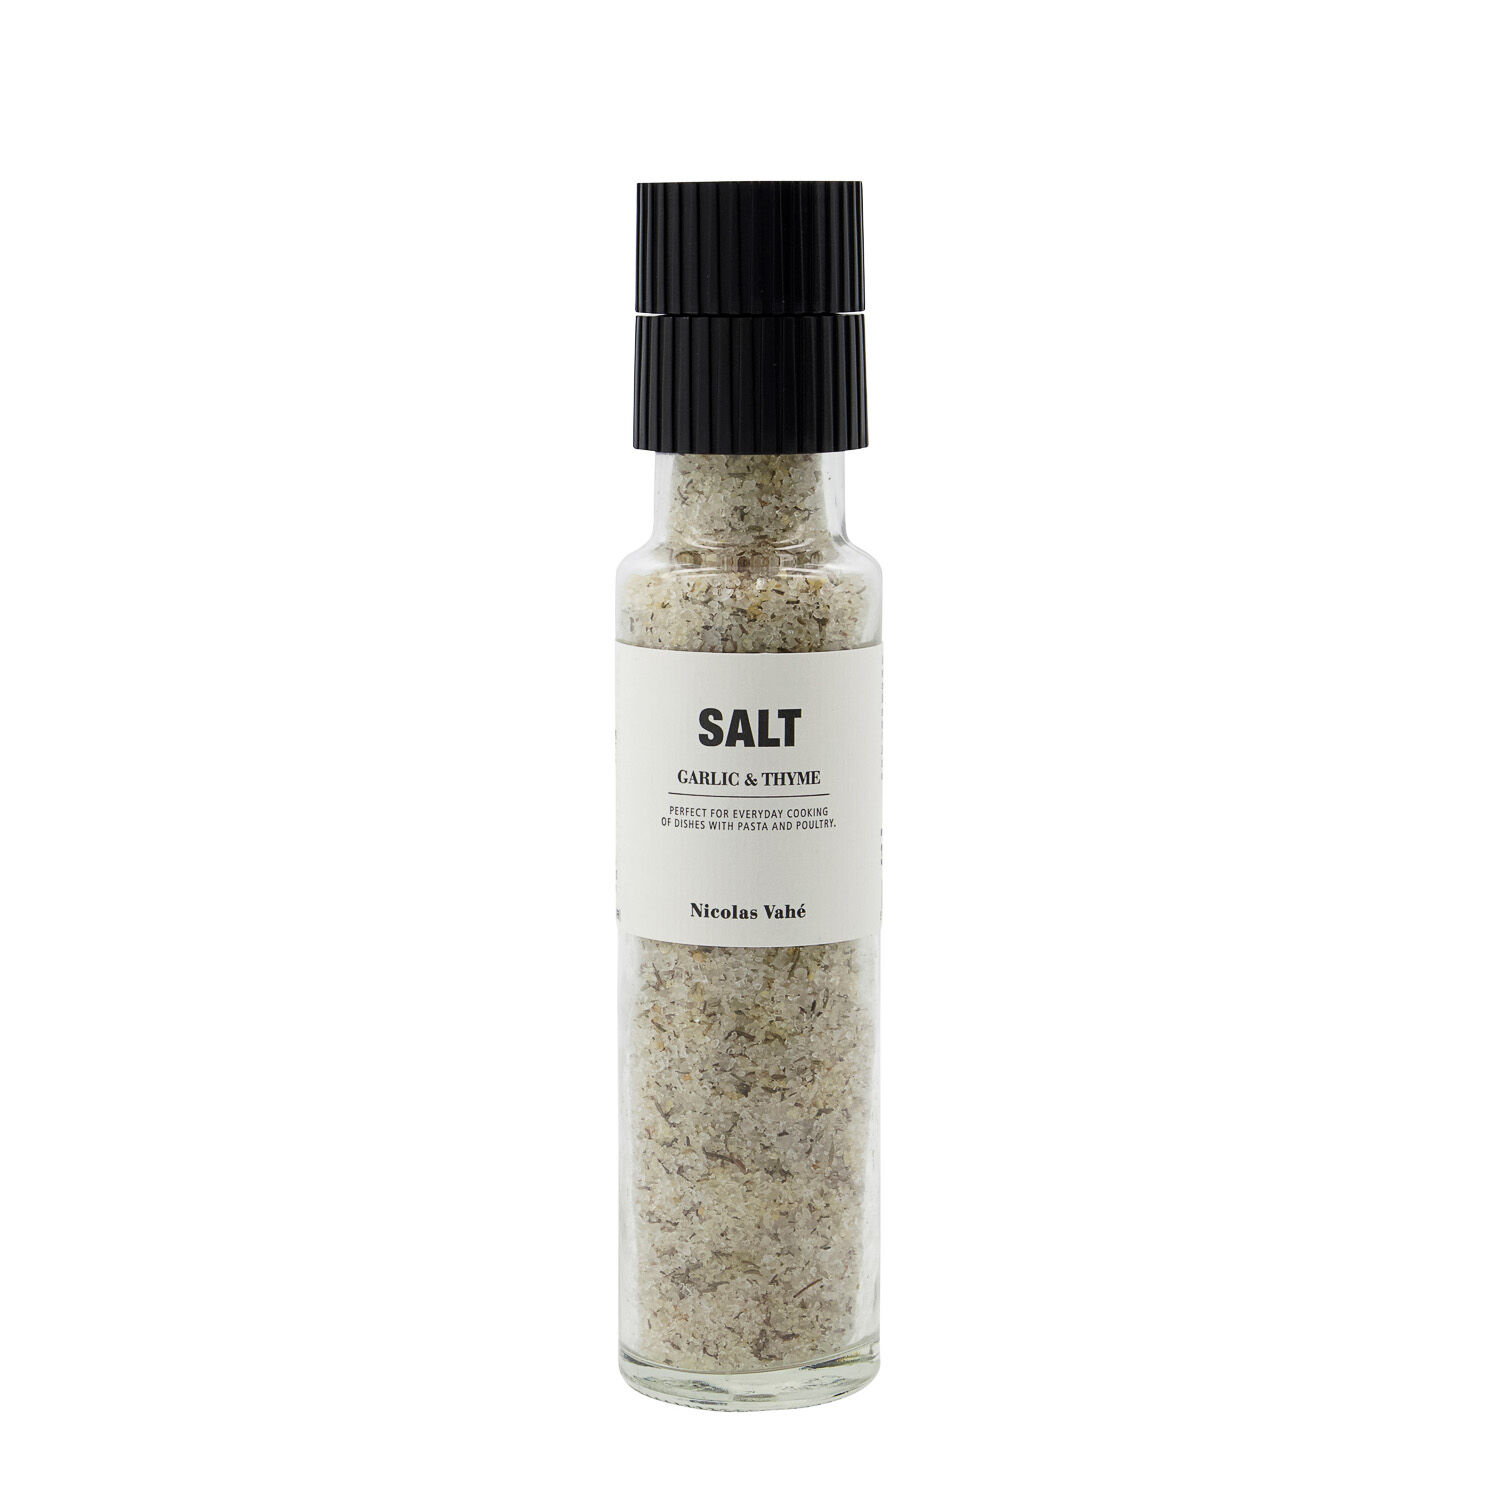 Standard produsent Nicolas Vahe Salt med hvitløk og timian 300gr